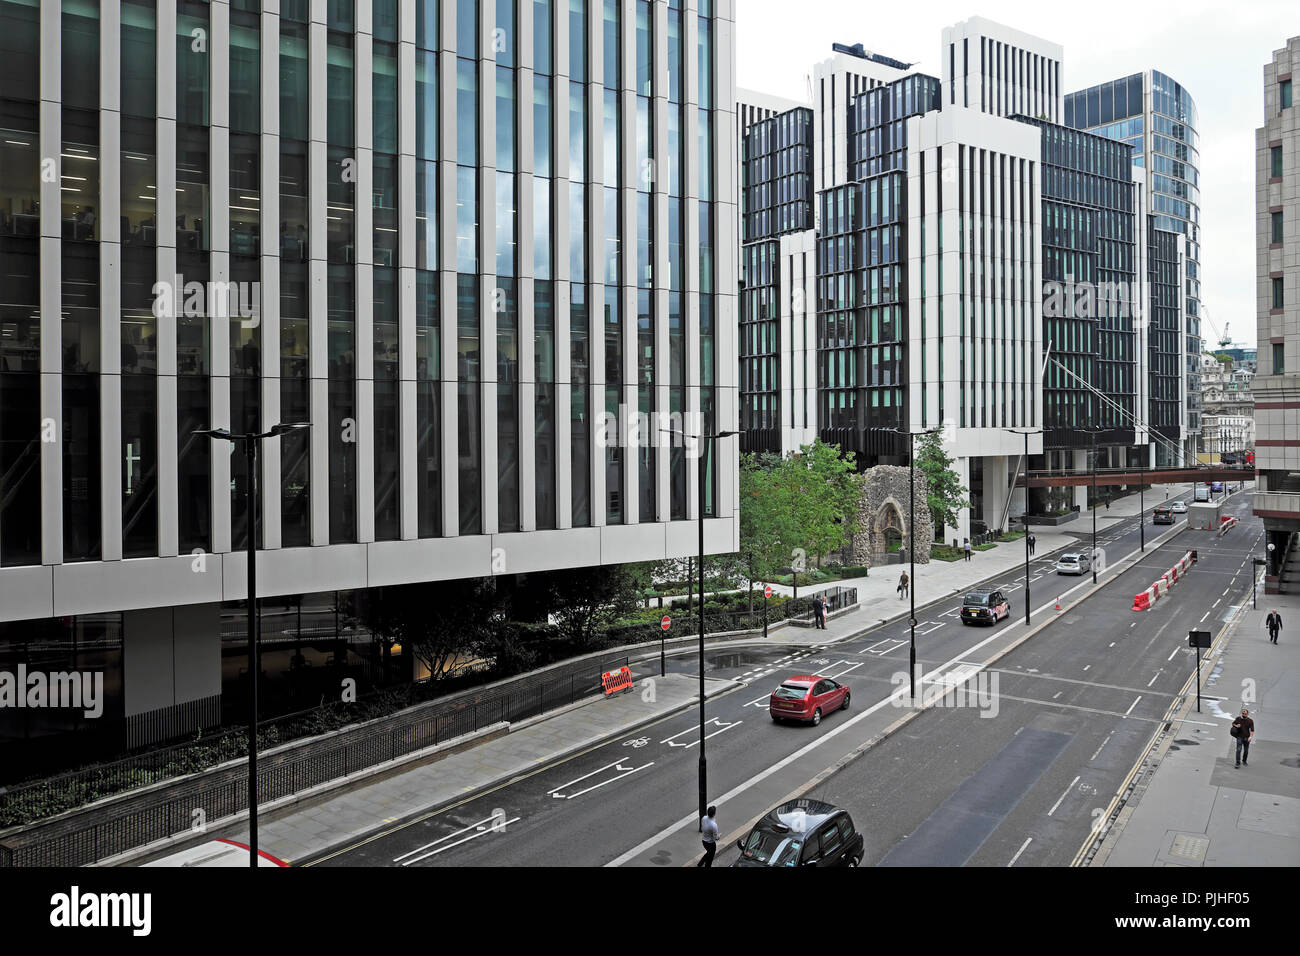 London Wall, neue moderne Bürogebäude Entwicklung an der London Wall Street Moorgate Bereich in der Stadt London UK KATHY DEWITT Stockfoto